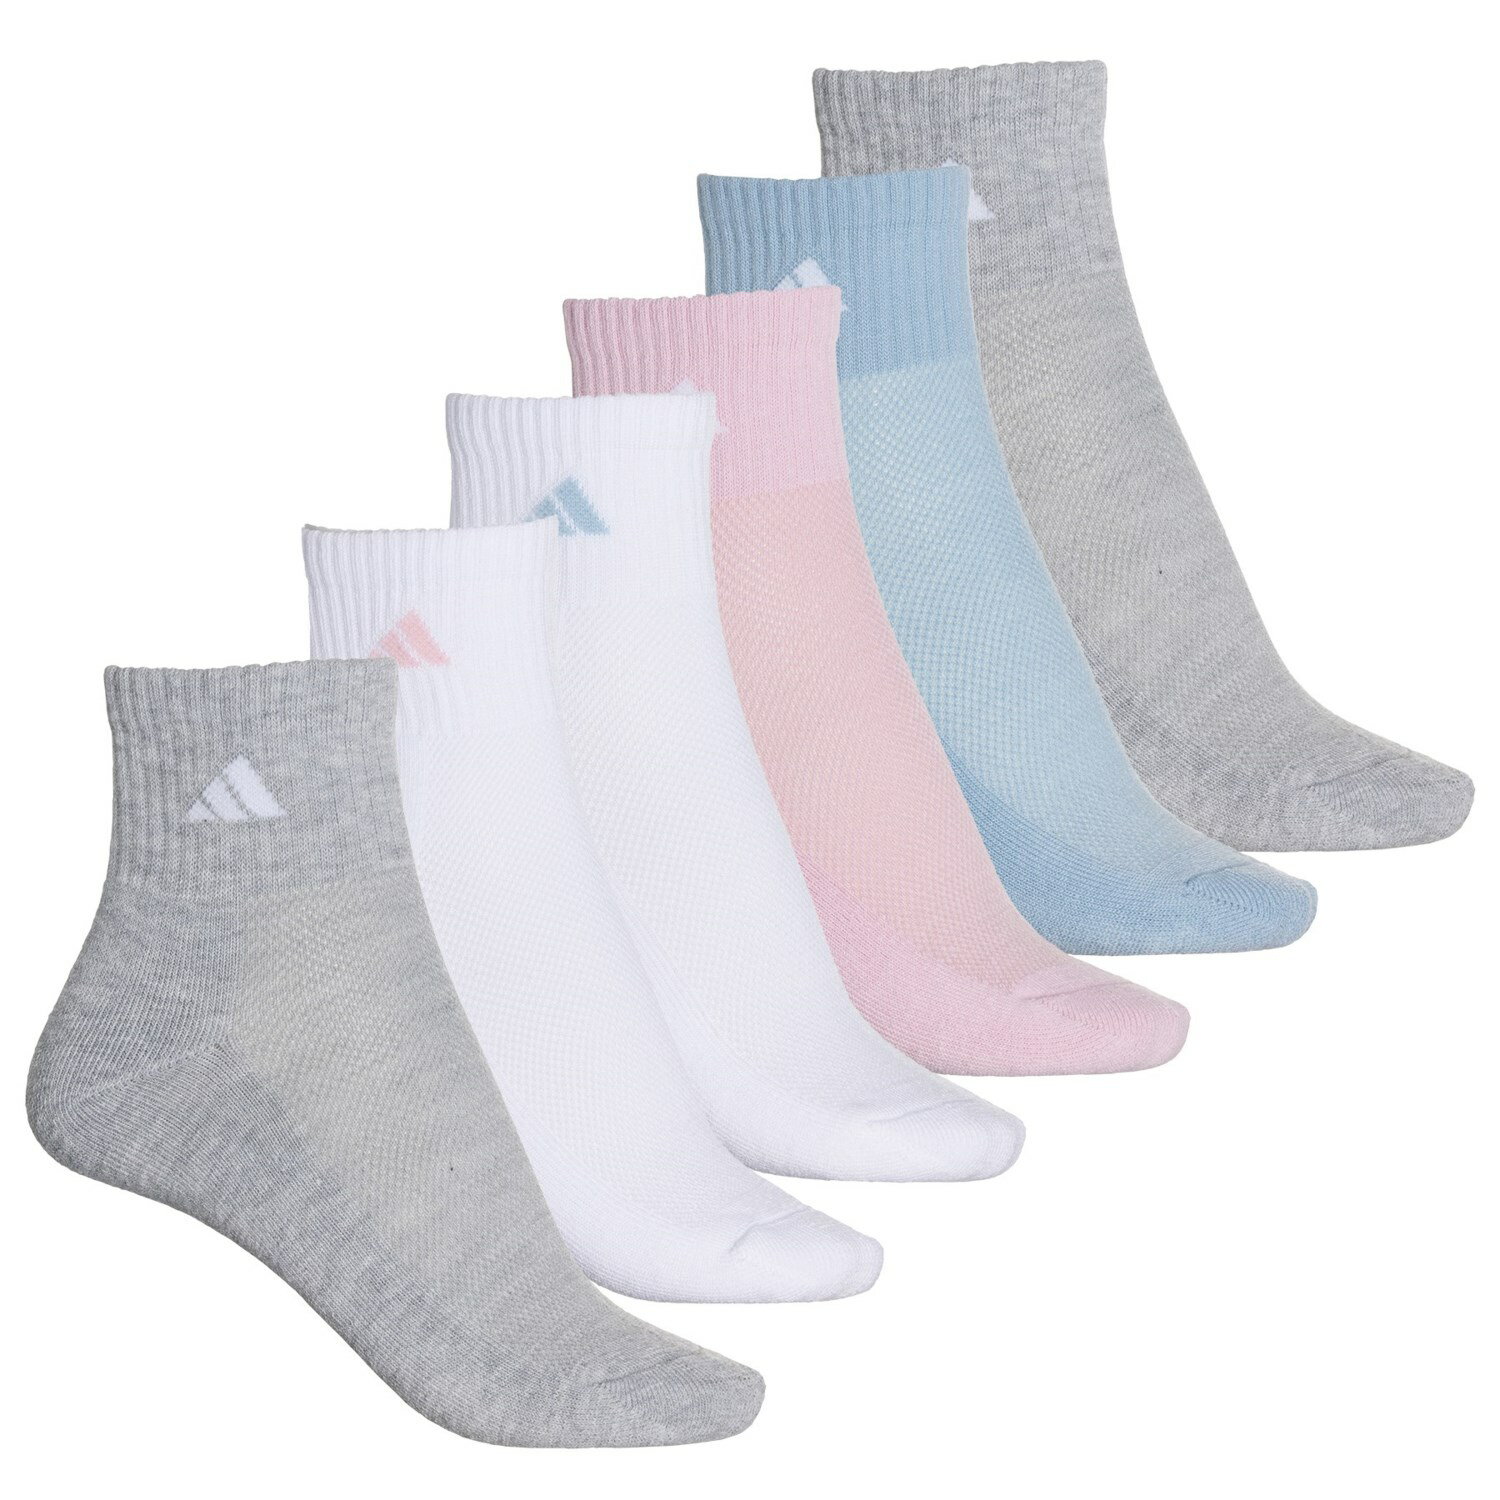 () AfB_X fB[X NbV AX`bN \bNX adidas women Cushioned Athletic Socks (For Women) Soft Vision/White/Light Grey